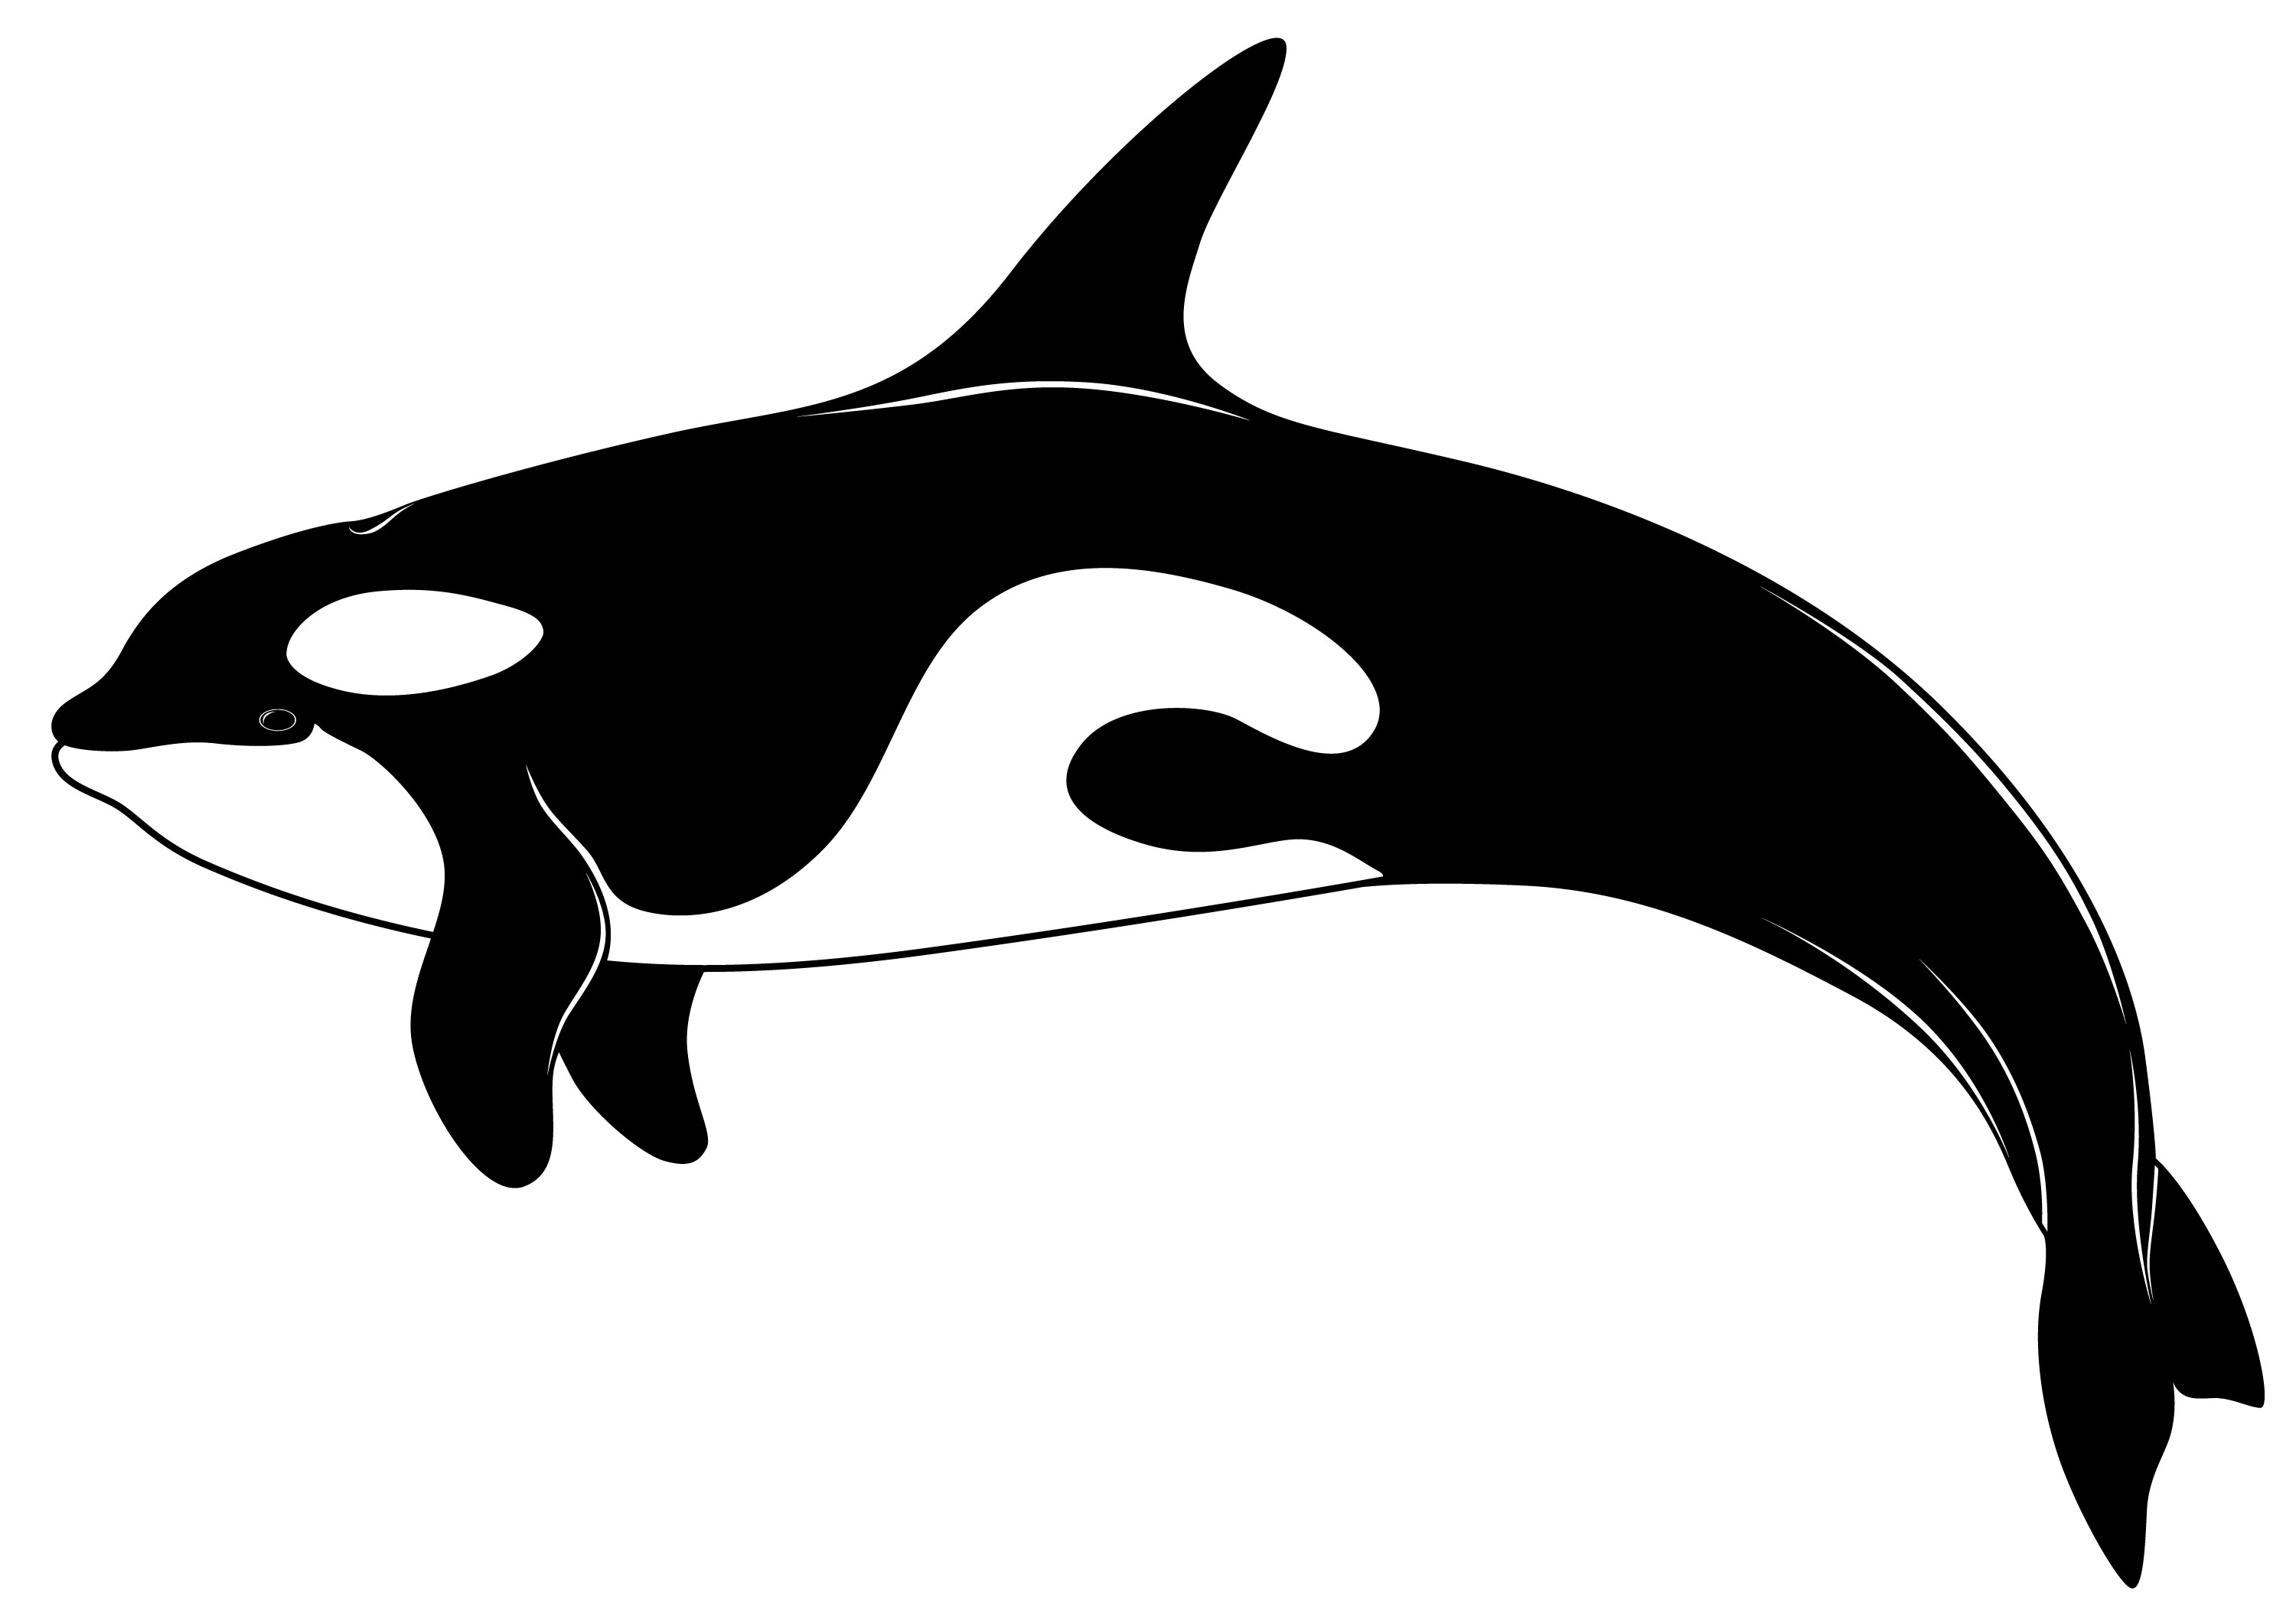 Orca whale clip art - Clipart